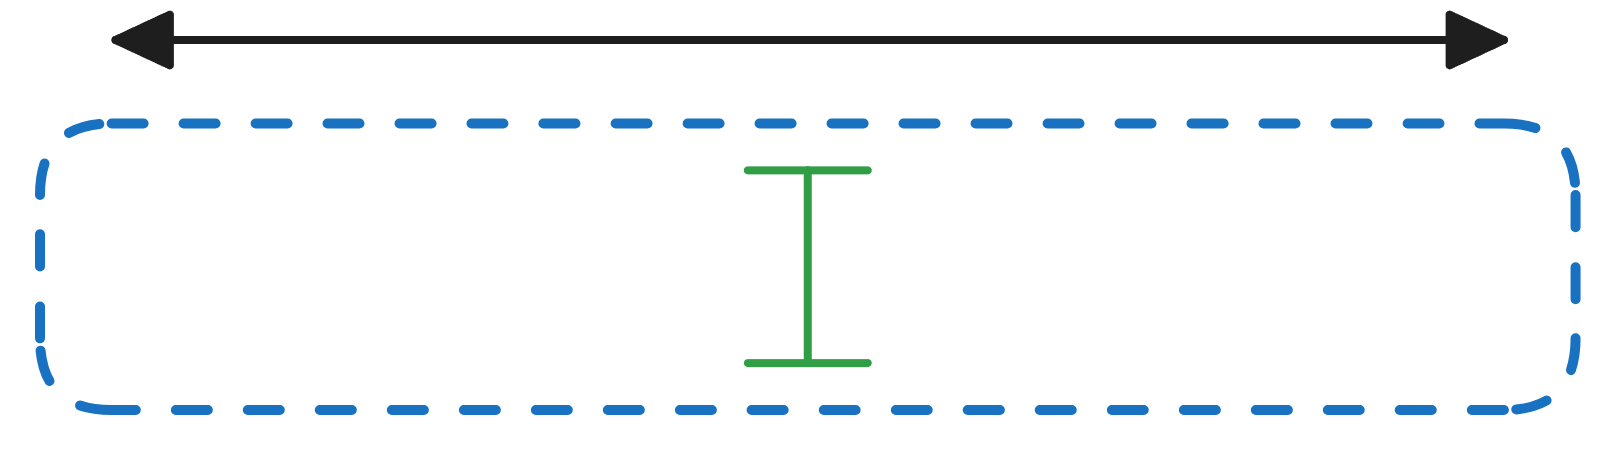 Image showing align horizontal